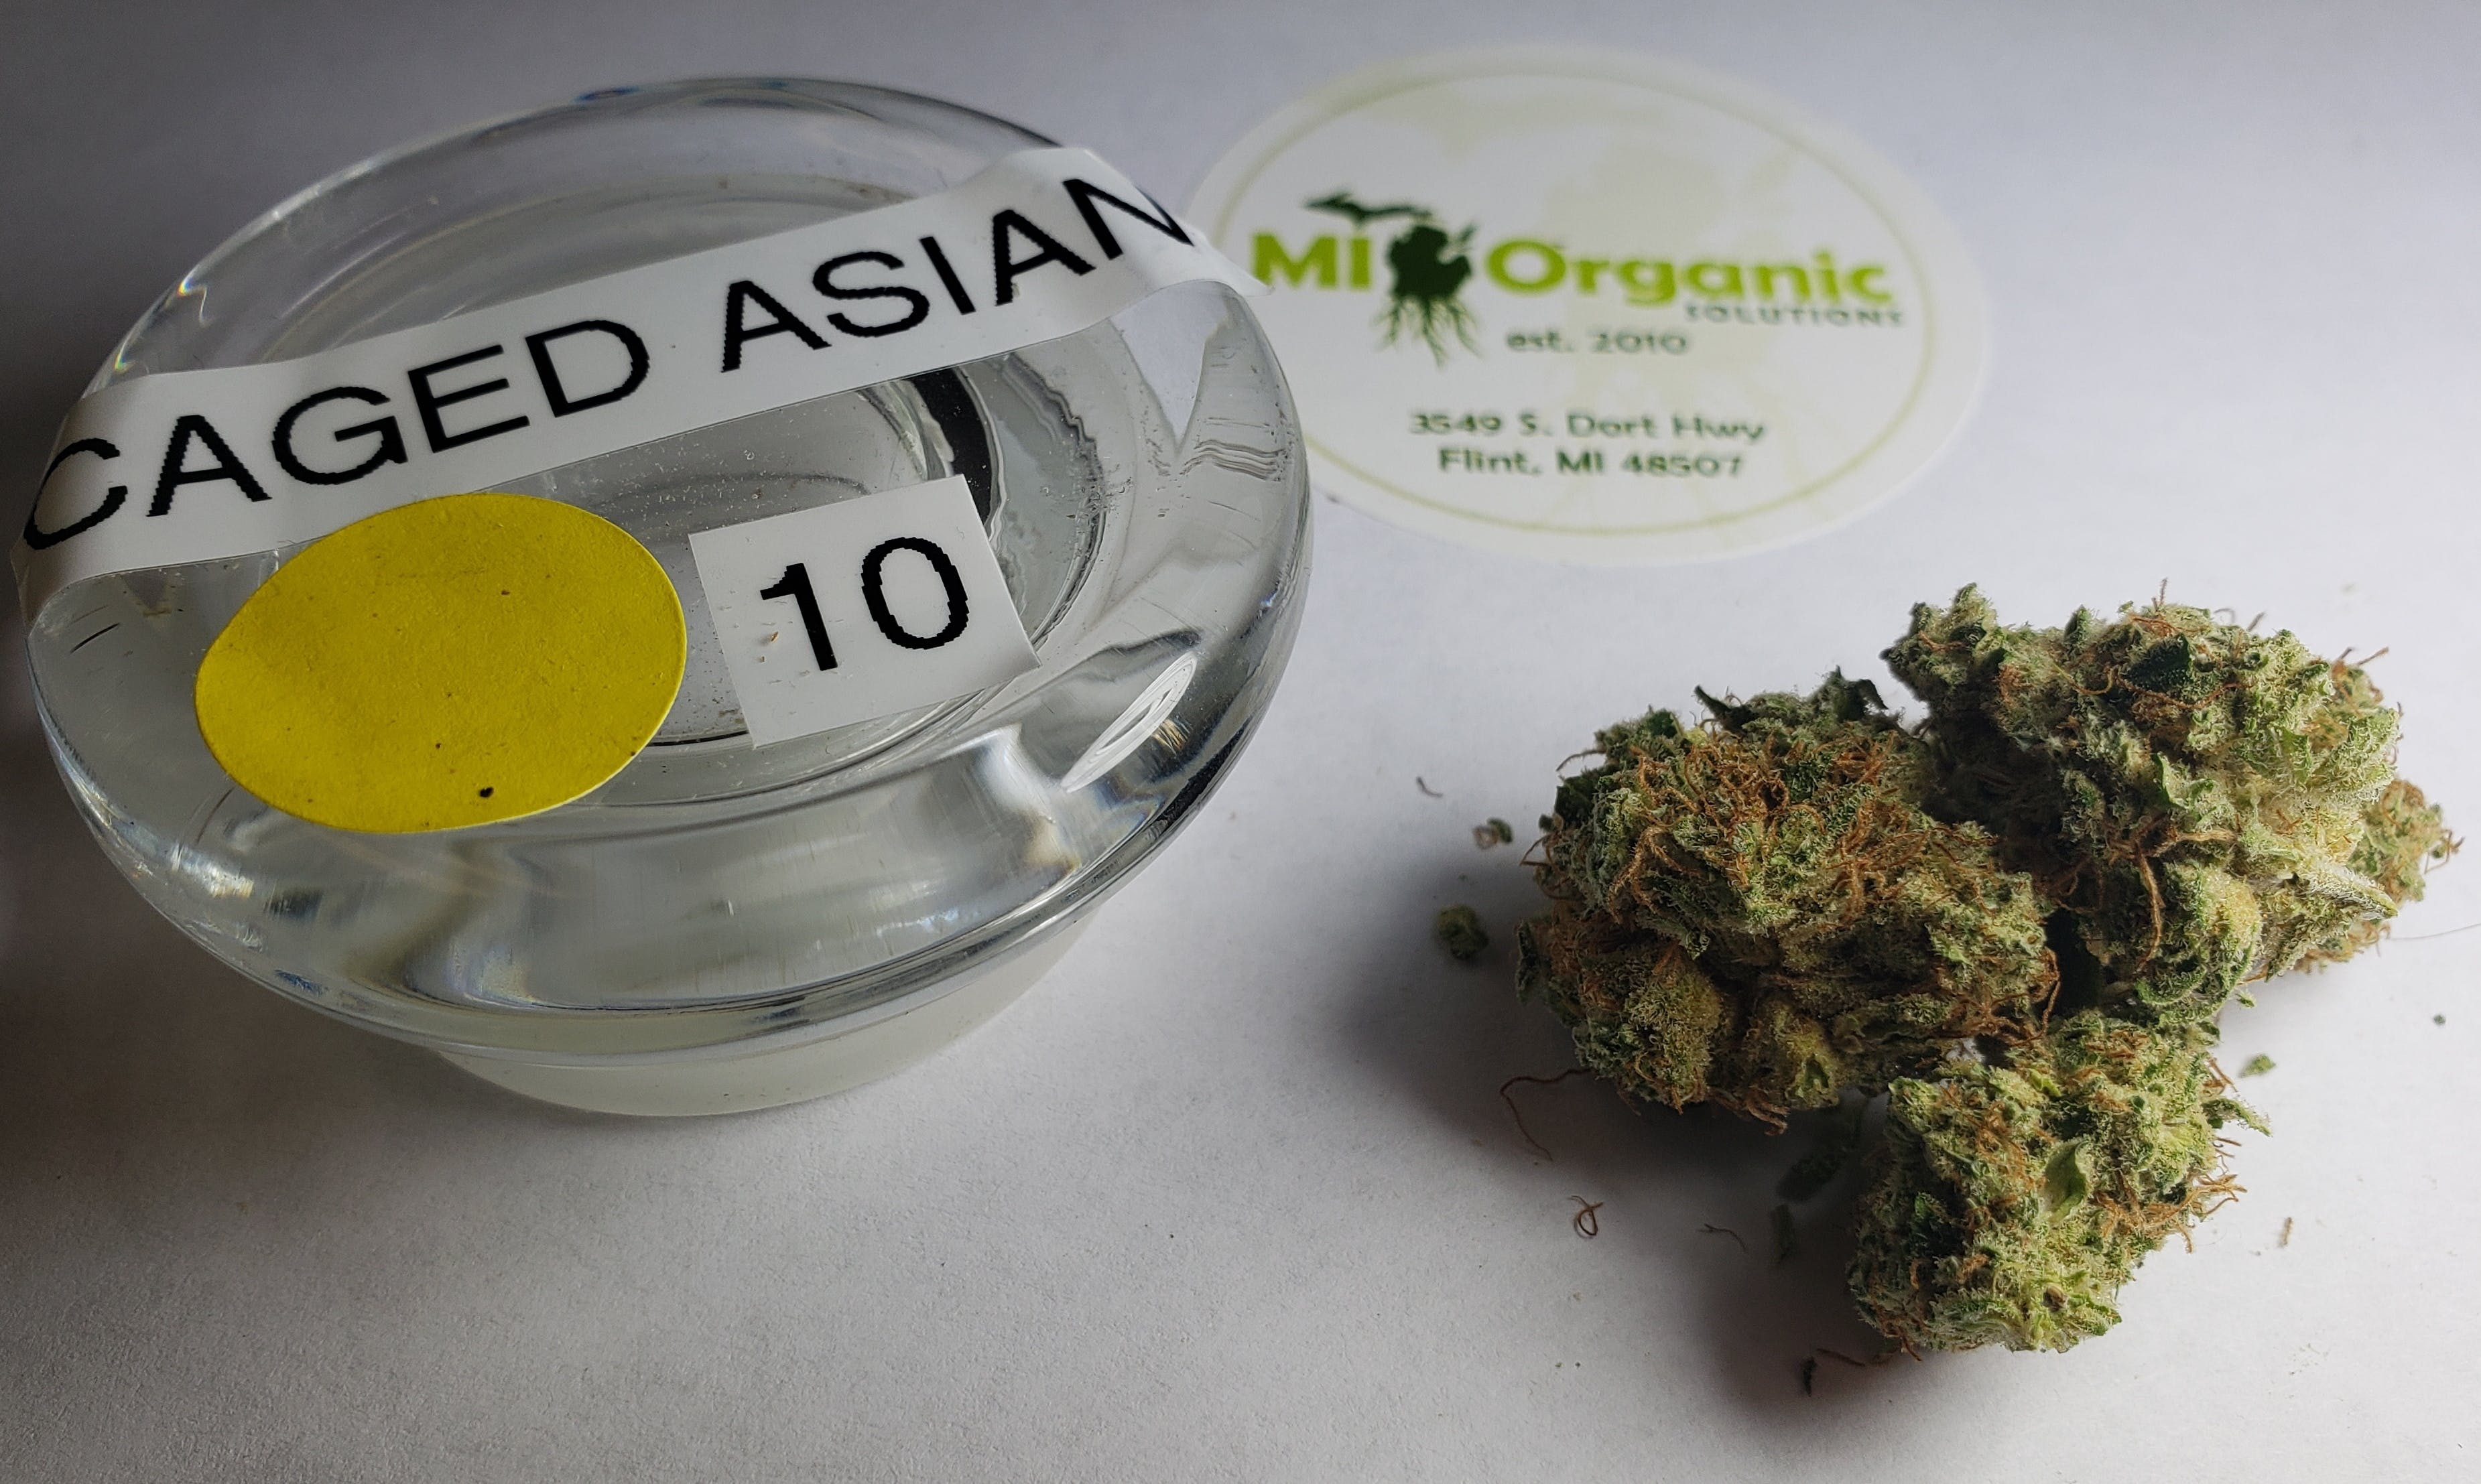 marijuana-dispensaries-3553-s-dort-hwy-suite-106-flint-caged-asian